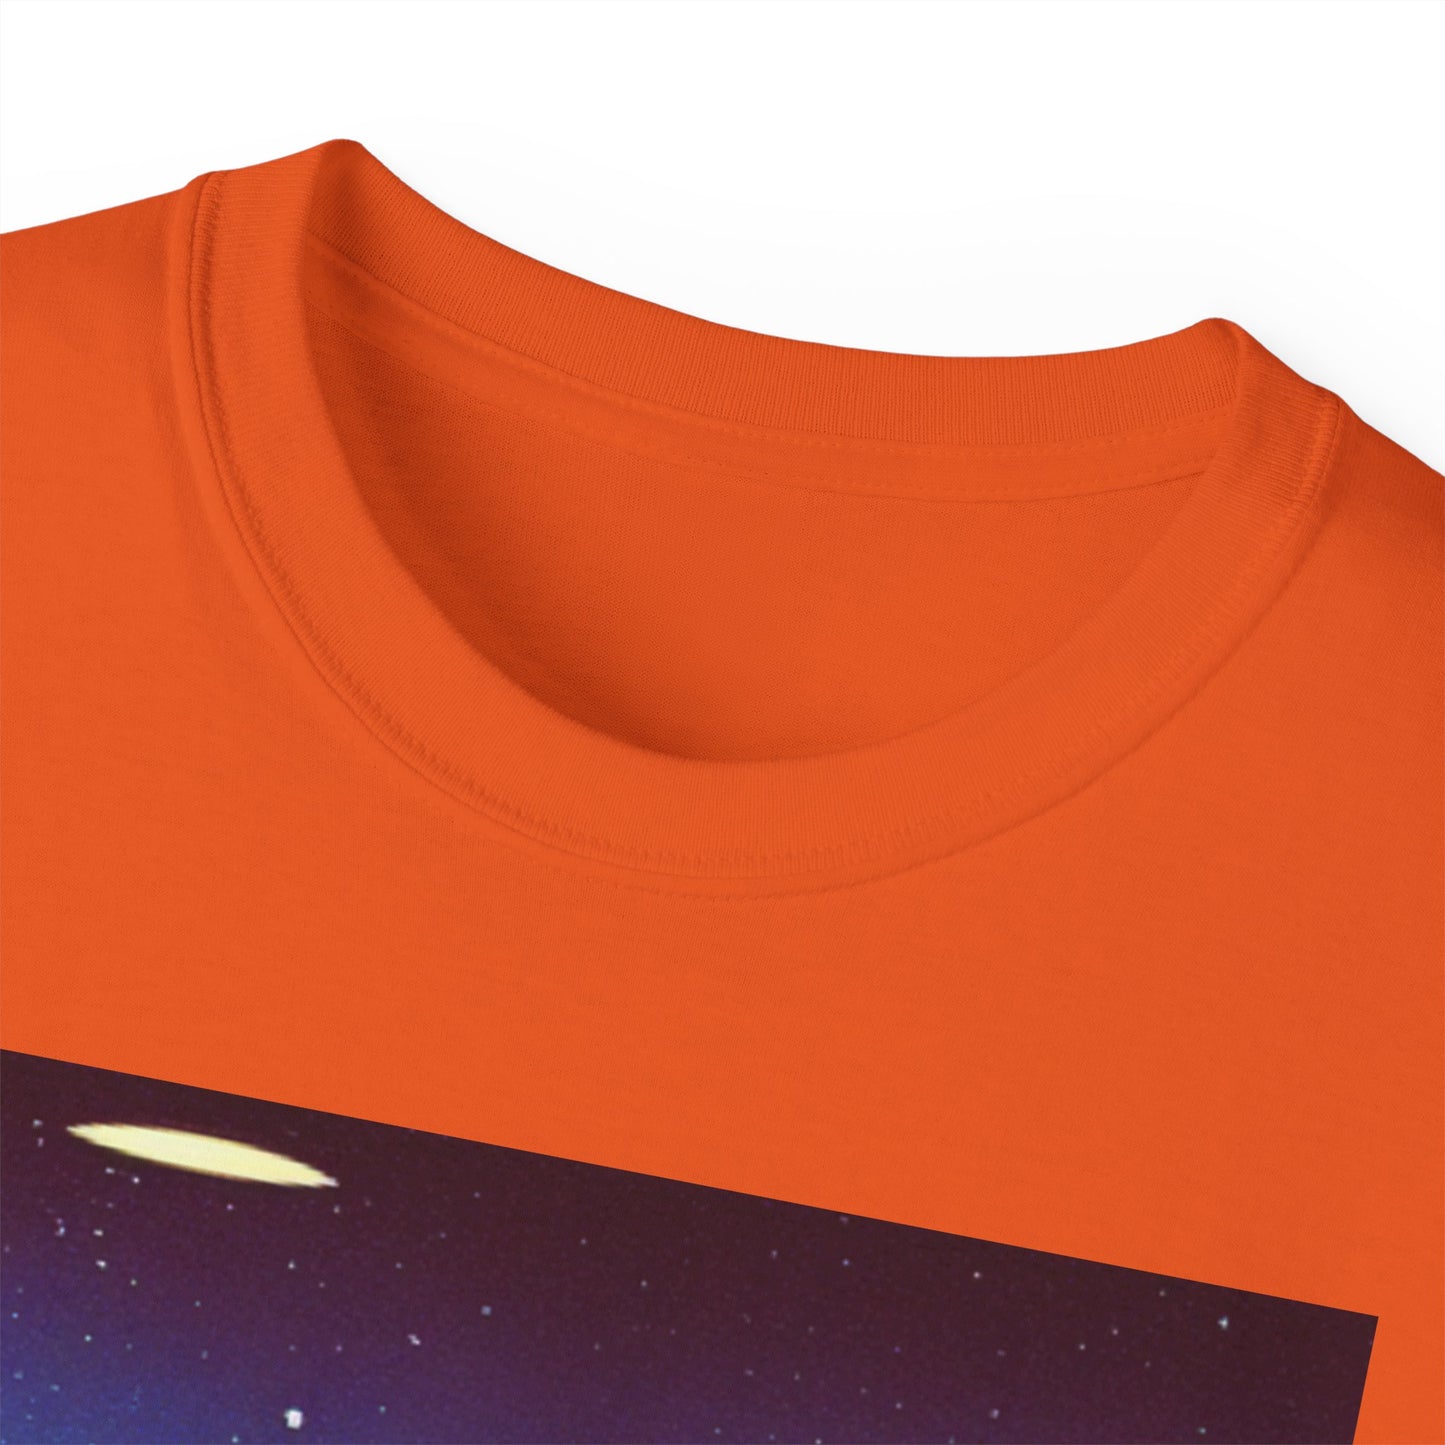 'Retro Sci-Fi Nessie' Unisex Ultra Cotton T-shirt